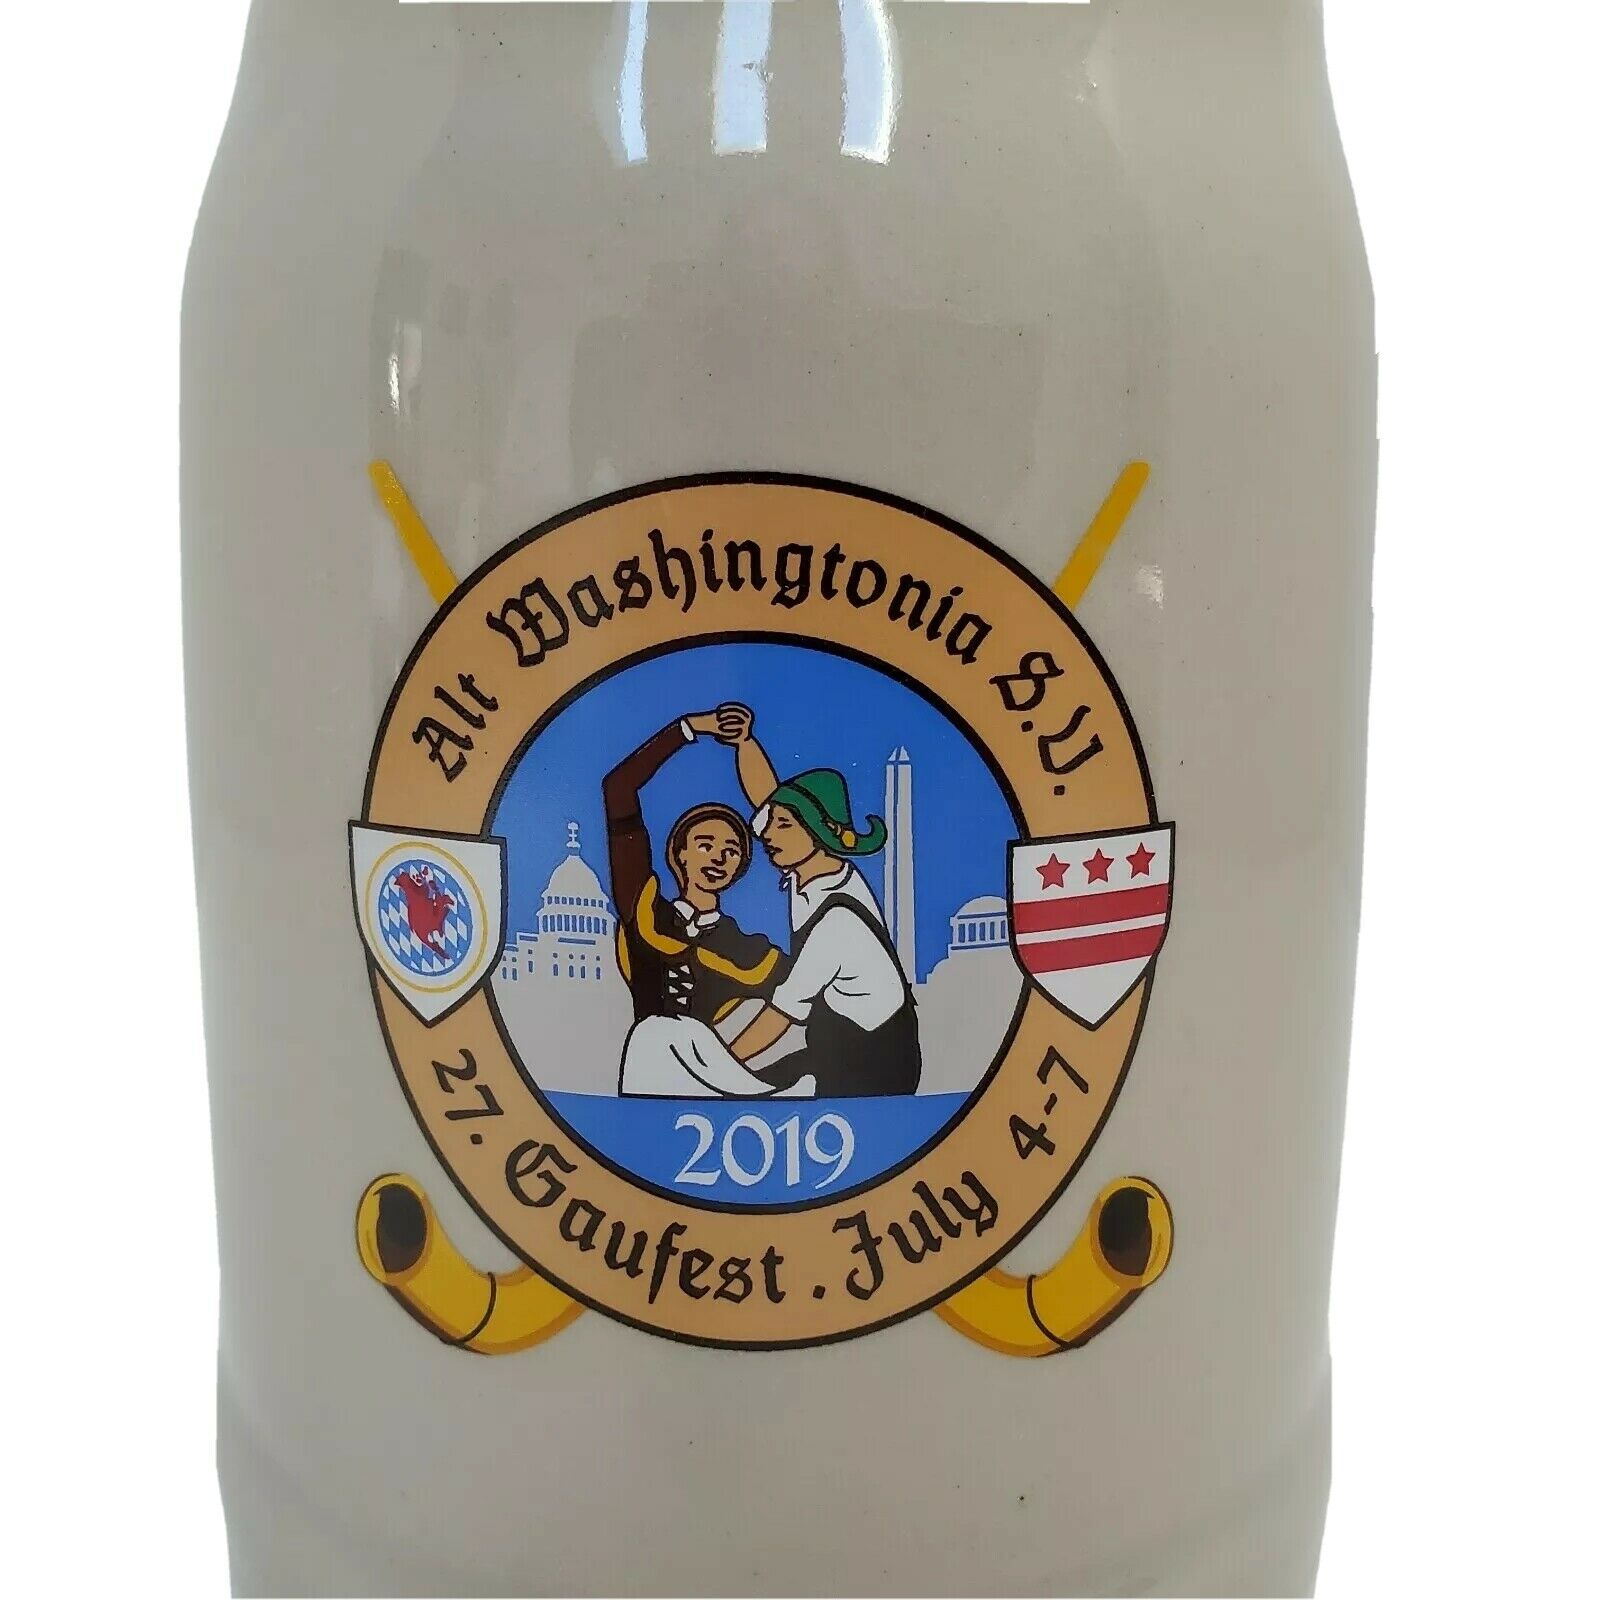 Gaufest 2019 Beer Stein Mug Washington Dc Made In Germany Rastal 0.5 Liter